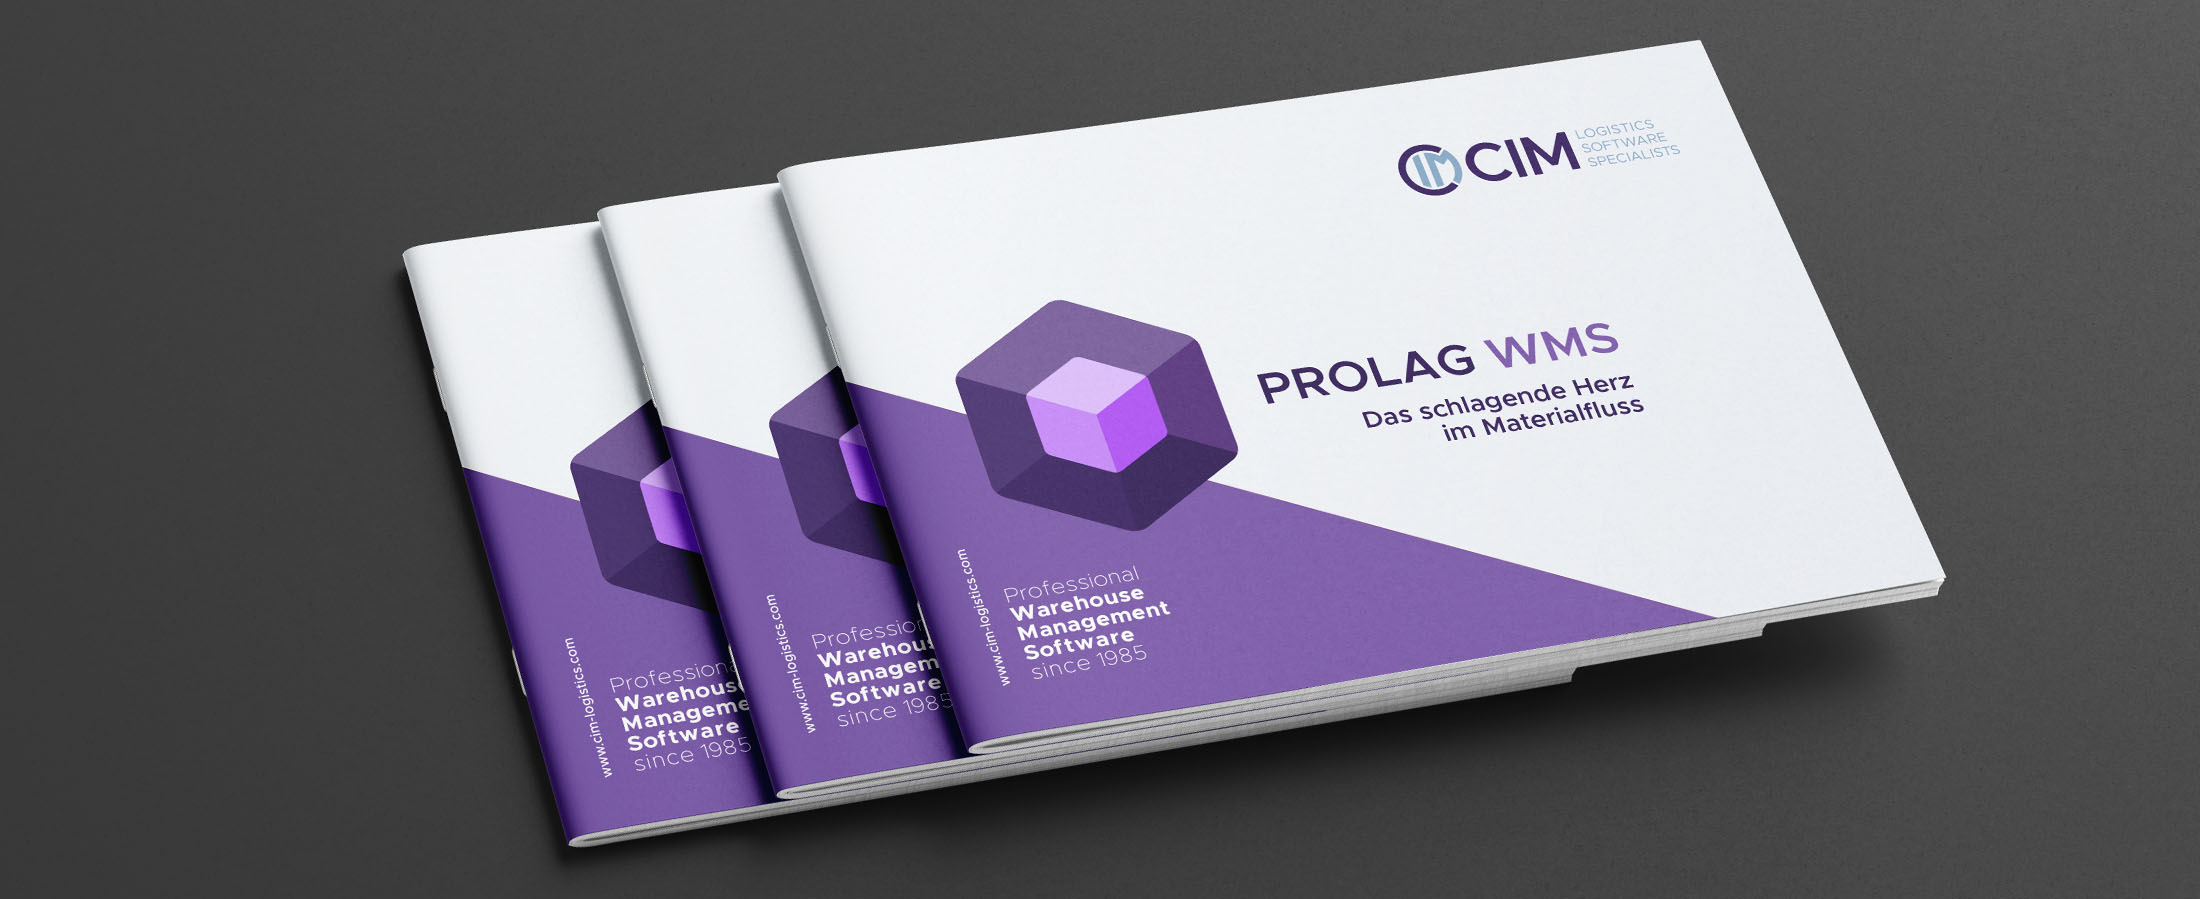 PROLAG World solutions brochure WMS